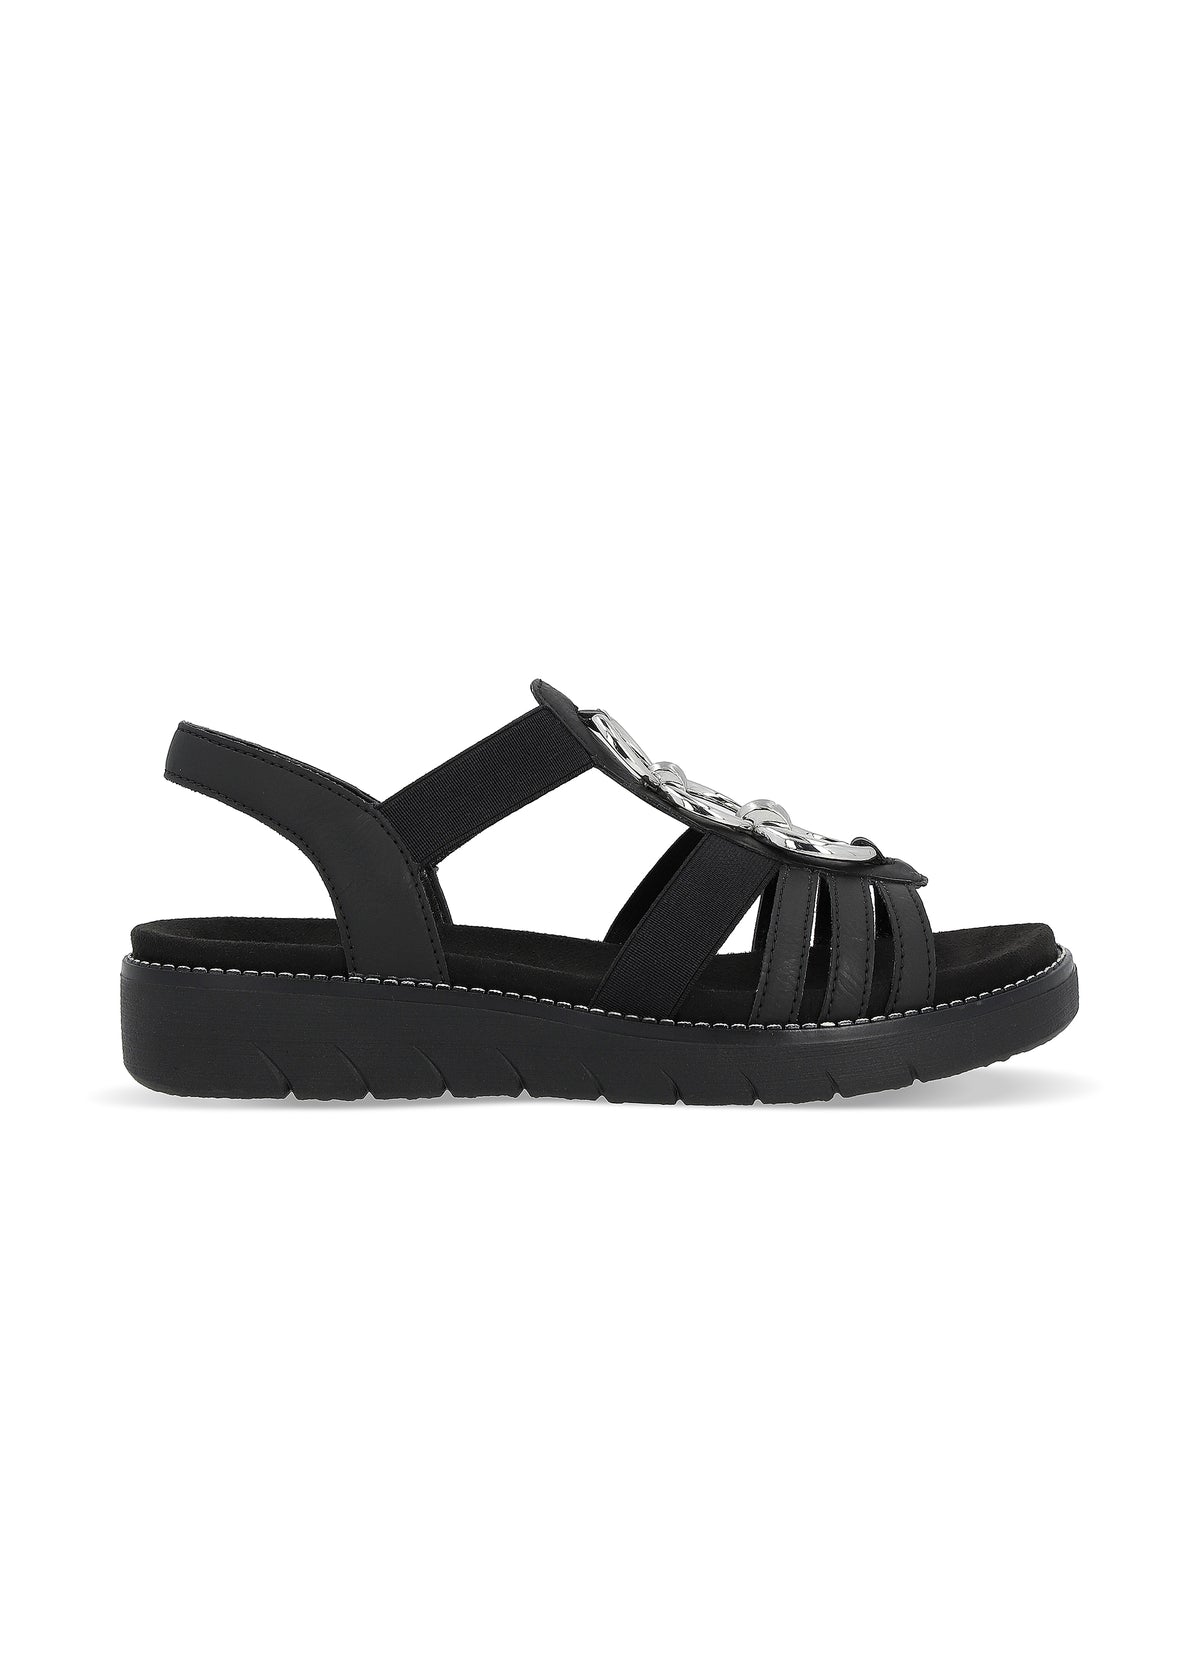 Sandals with elastic straps - black, silver decorations, vegan